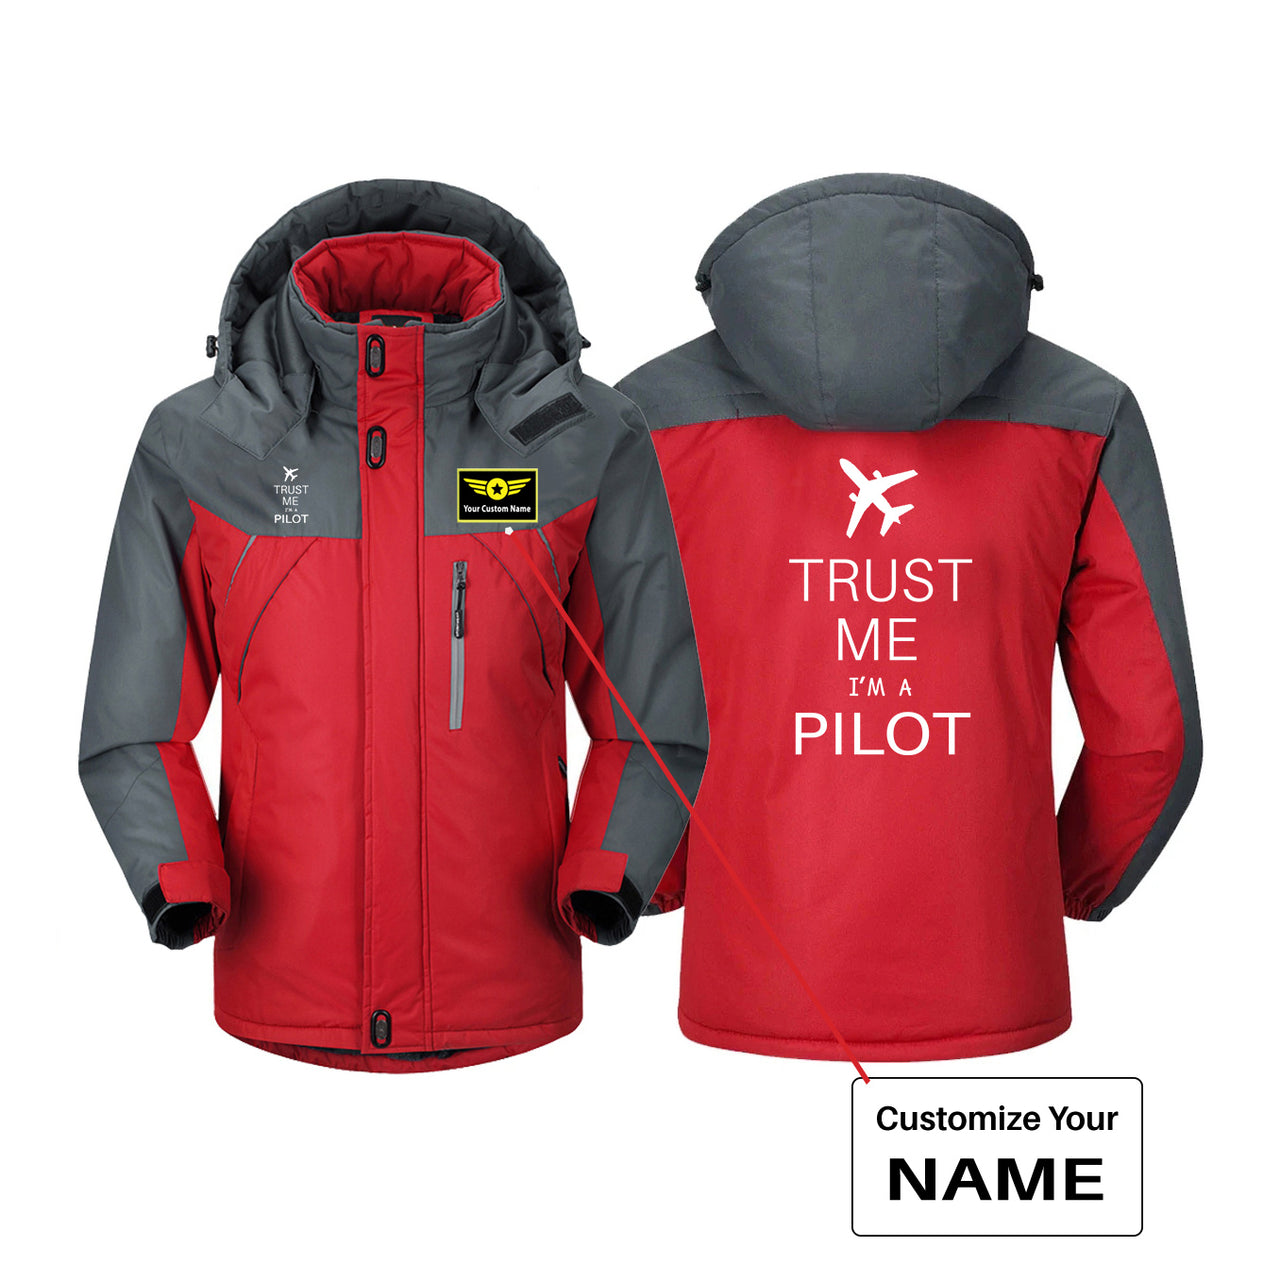 Trust Me I'm a Pilot 2 Designed Thick Winter Jackets